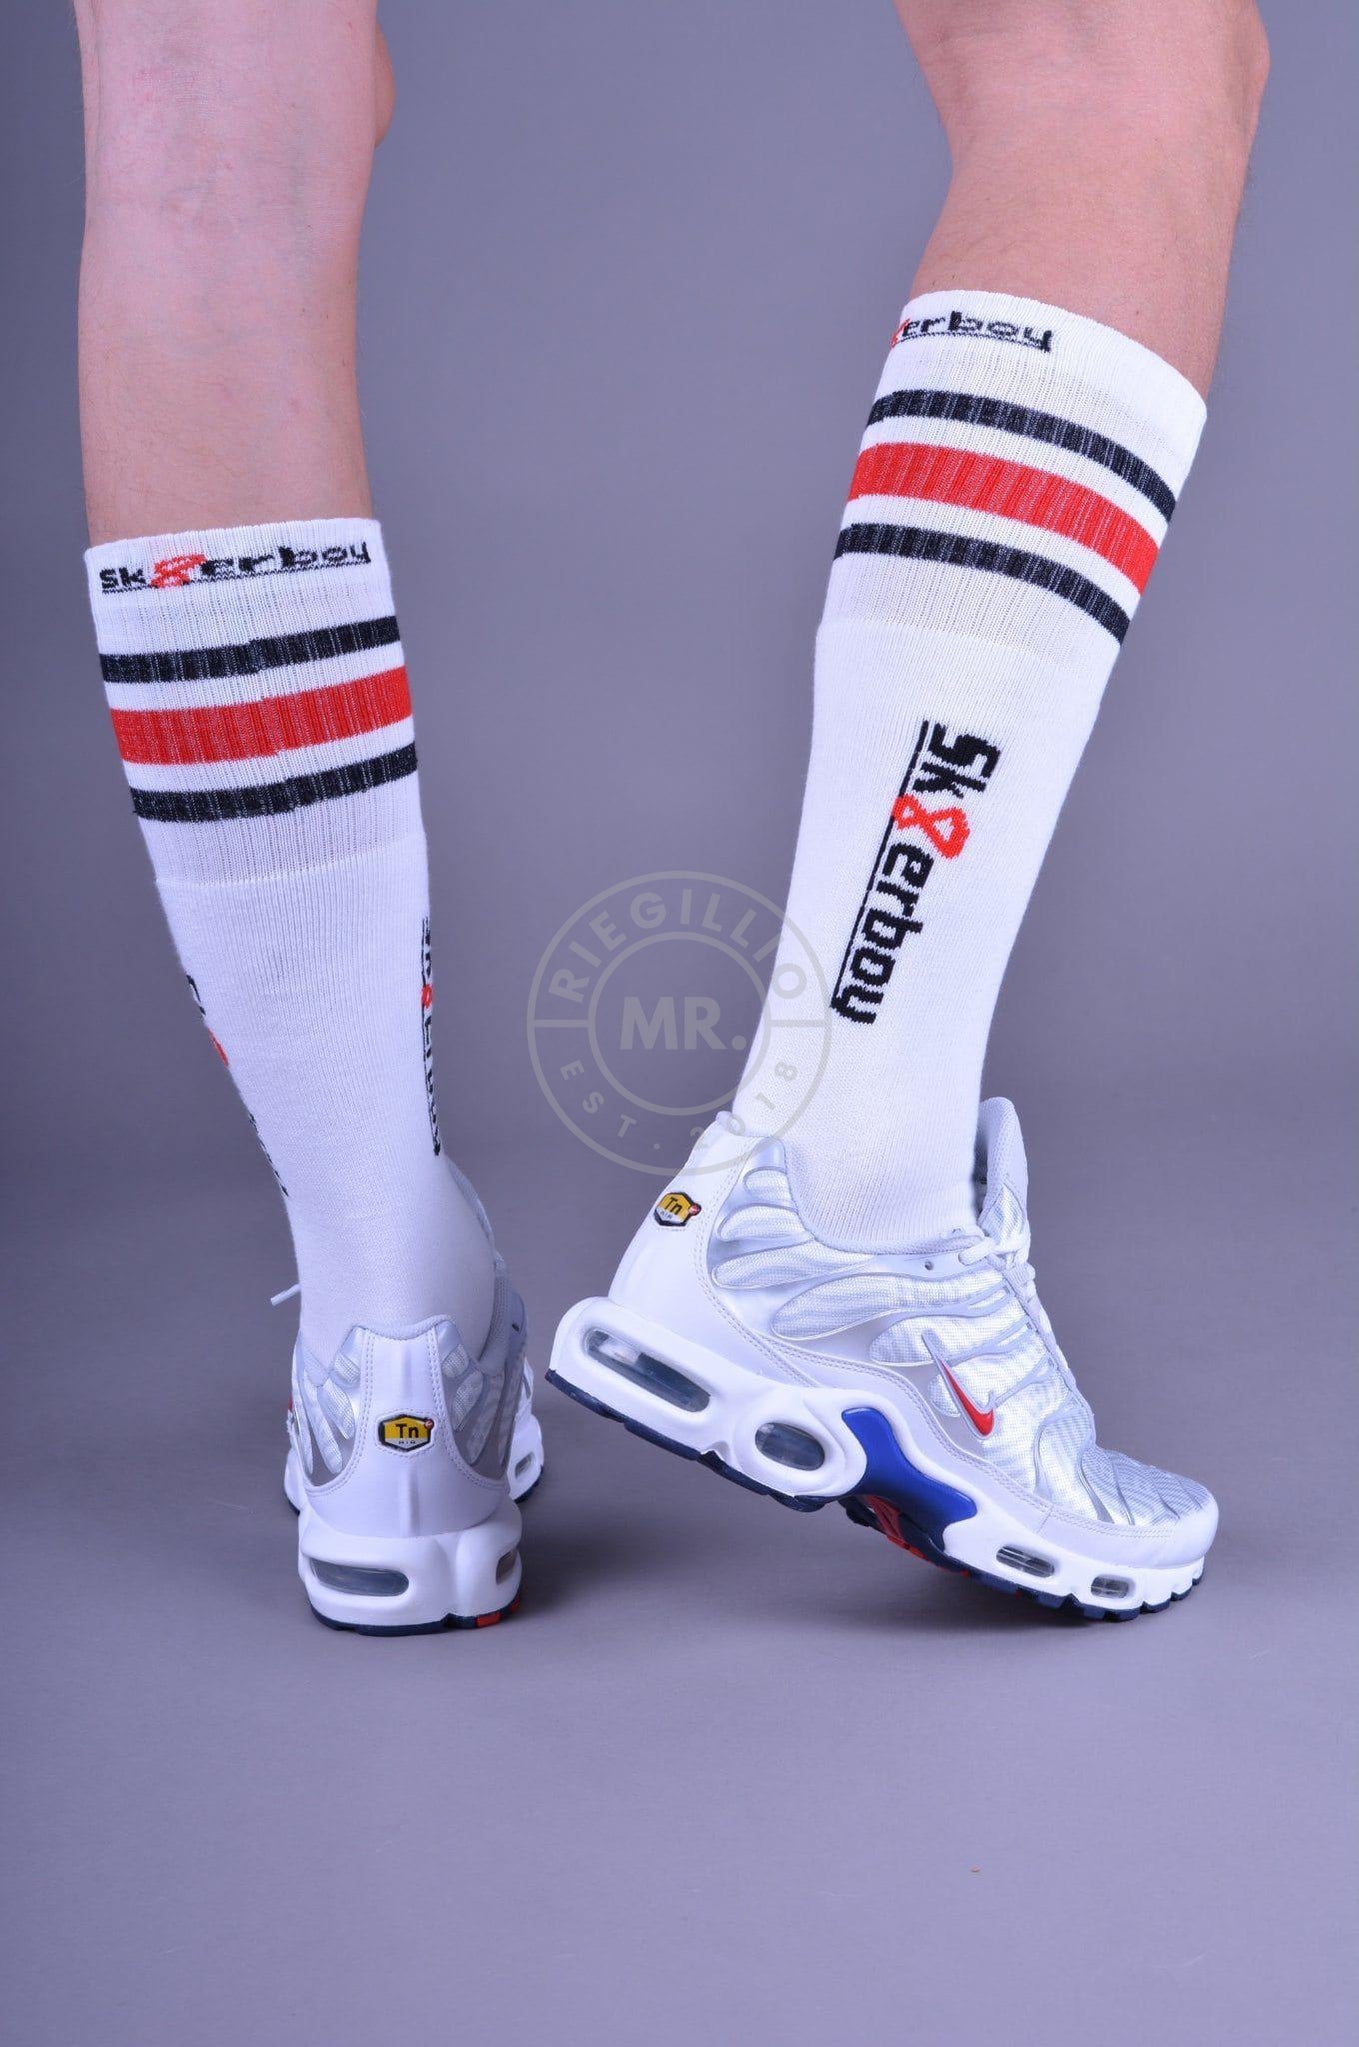 Sk8erboy Tube Socks-at MR. Riegillio